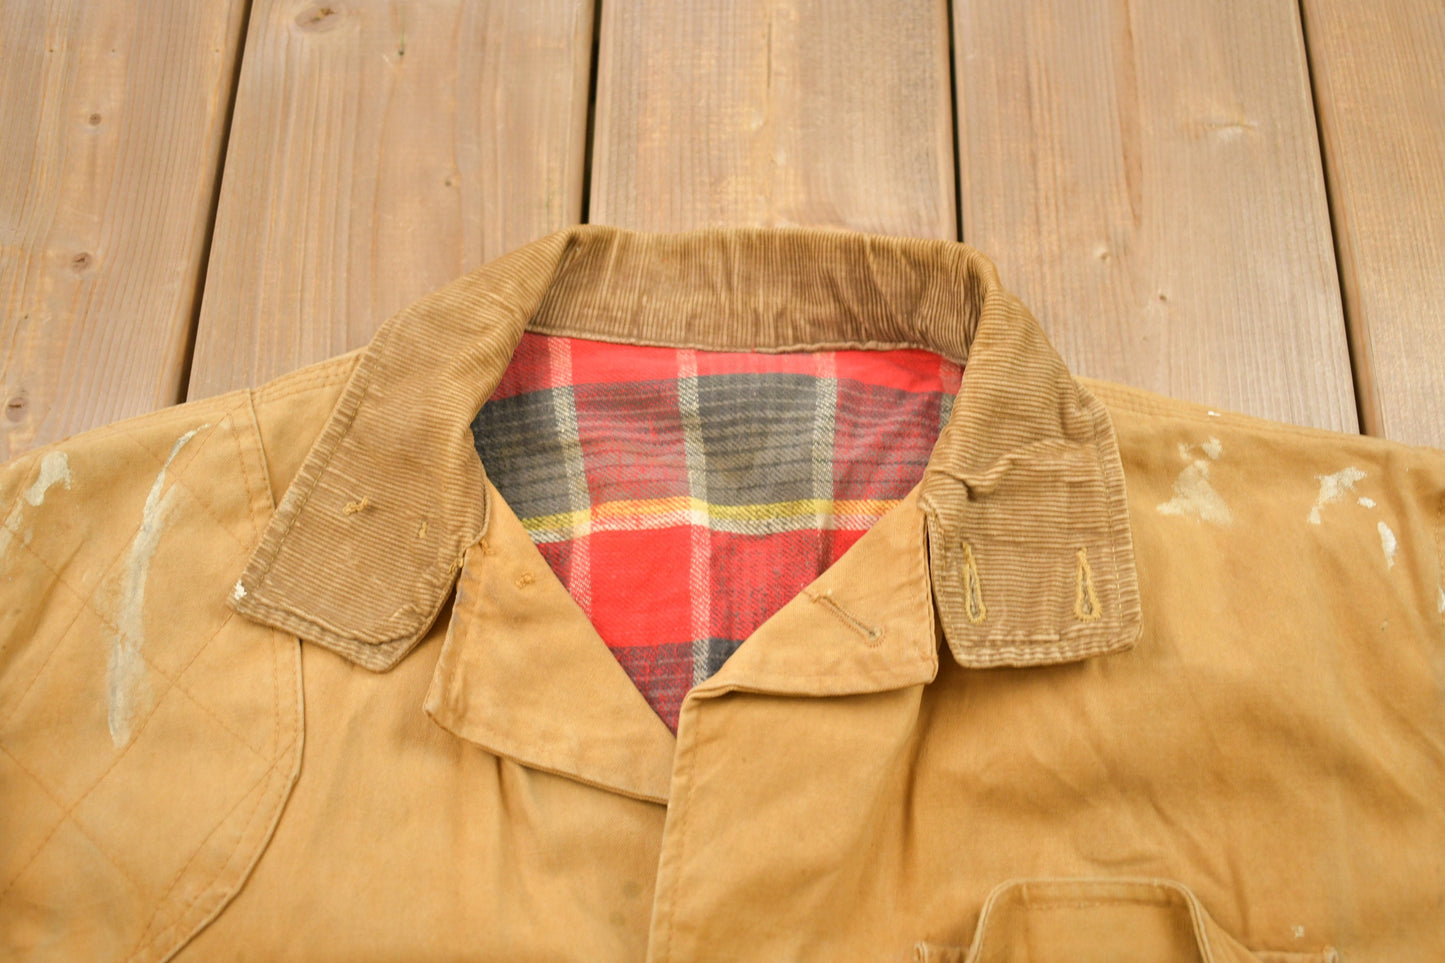 Vintage 1960s Canvas Chore Jacket / Workwear / Streetwear / Made In USA / 90s / Blanket Lined Jacket / Distressed Chore Jacket / Barn Coat